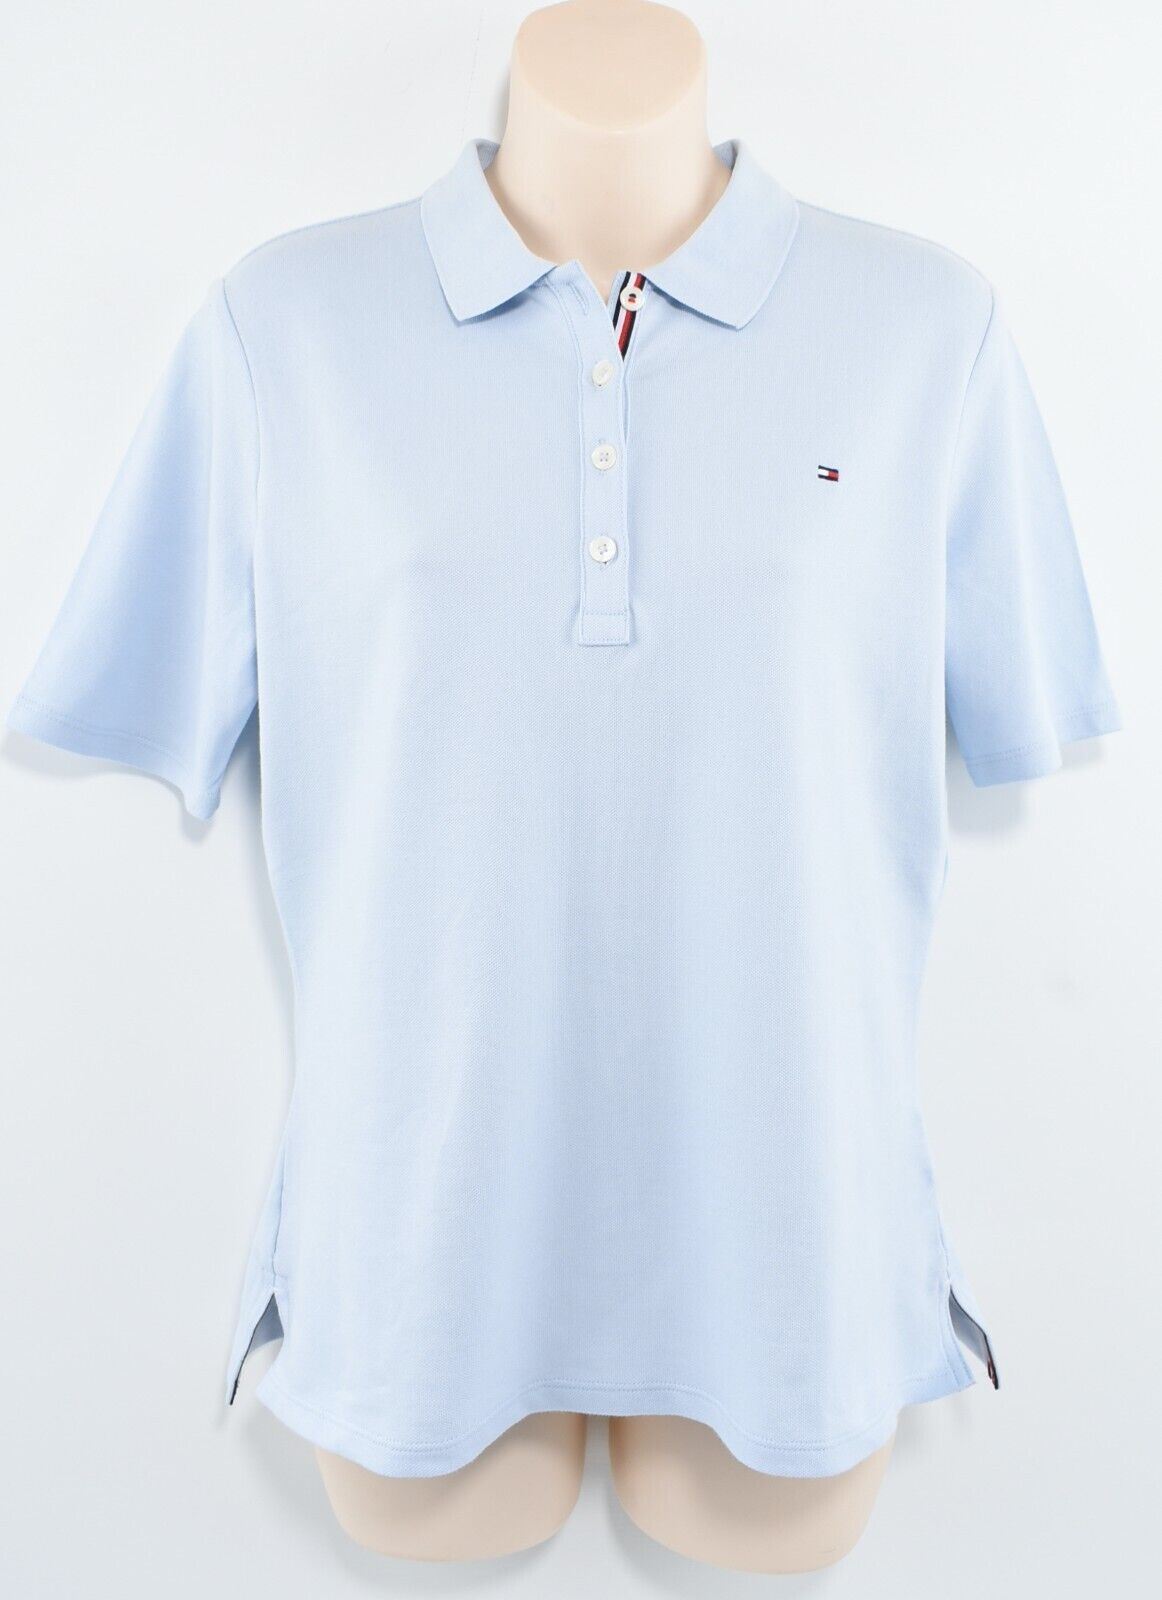 TOMMY HILFIGER Women's Classic Polo Shirt, Light Blue, size S /UK 10